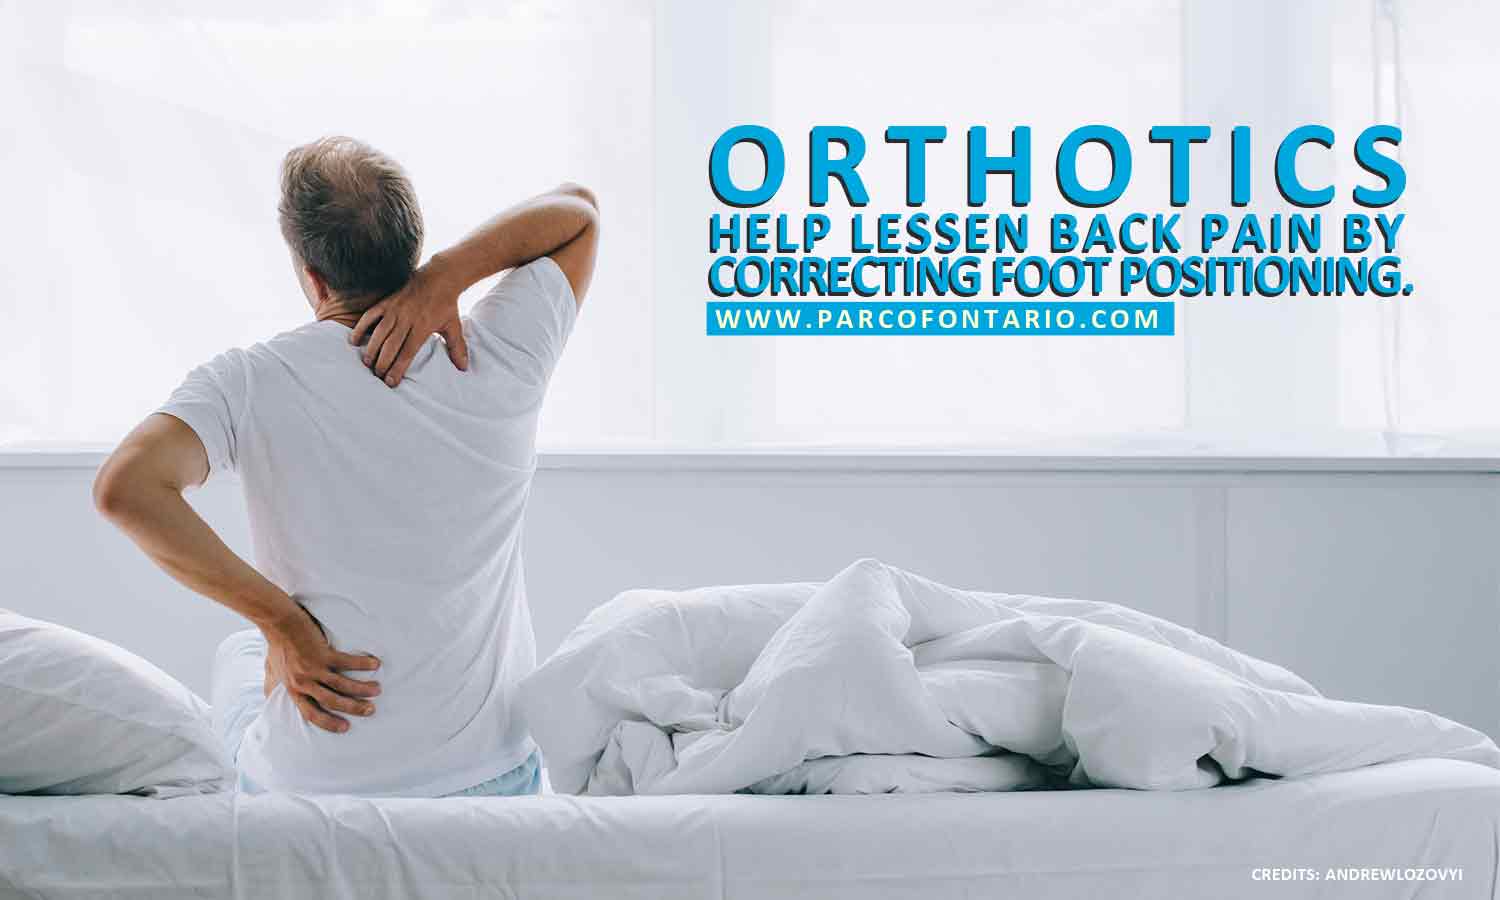 Orthotics help lessen back pain